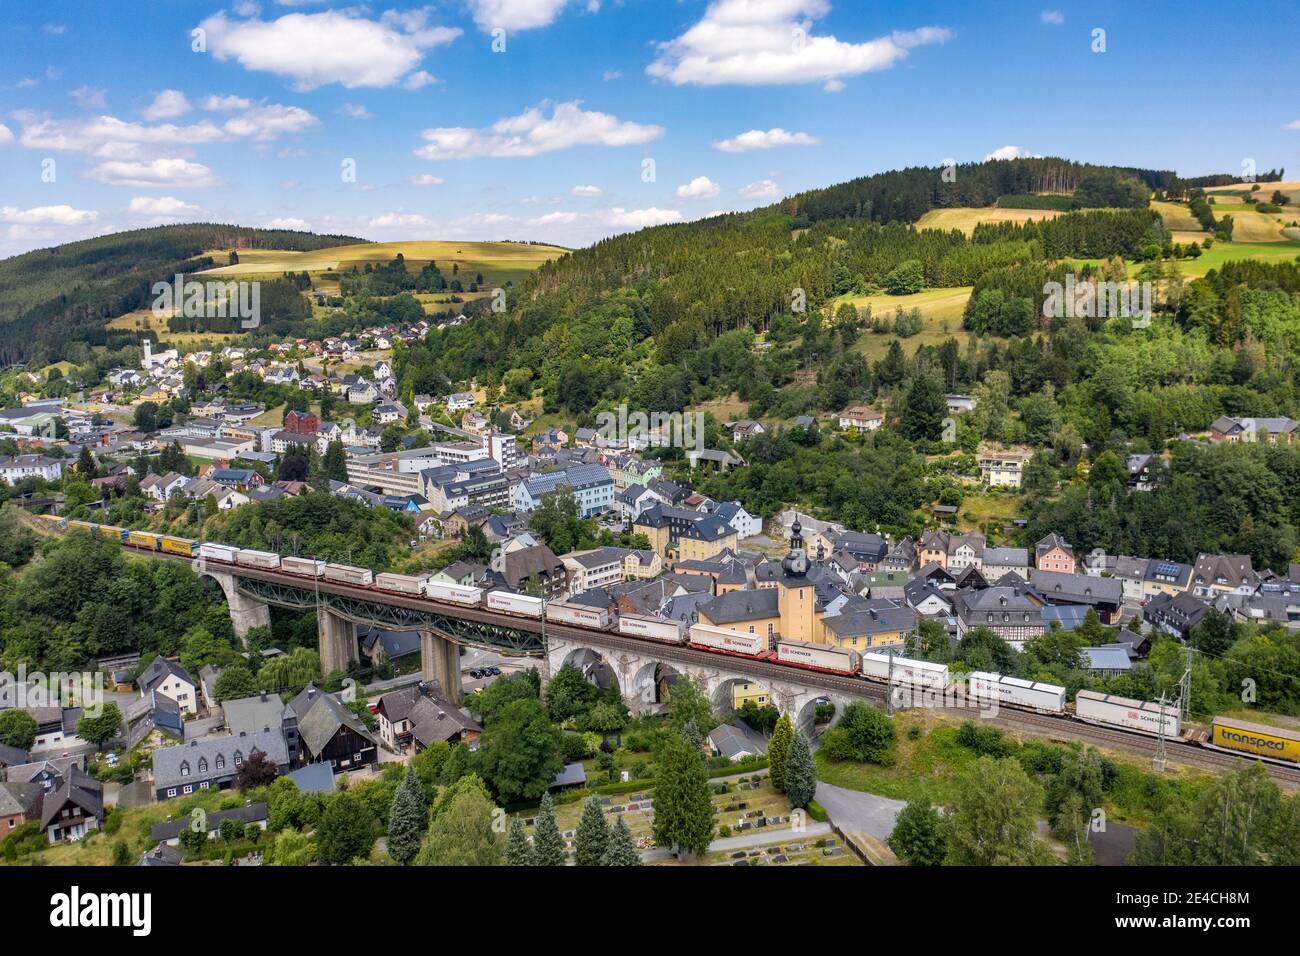 Germania, Baviera, Ludwigsstadt, treno, ponte, città, chiesa, case, vista aerea Foto Stock